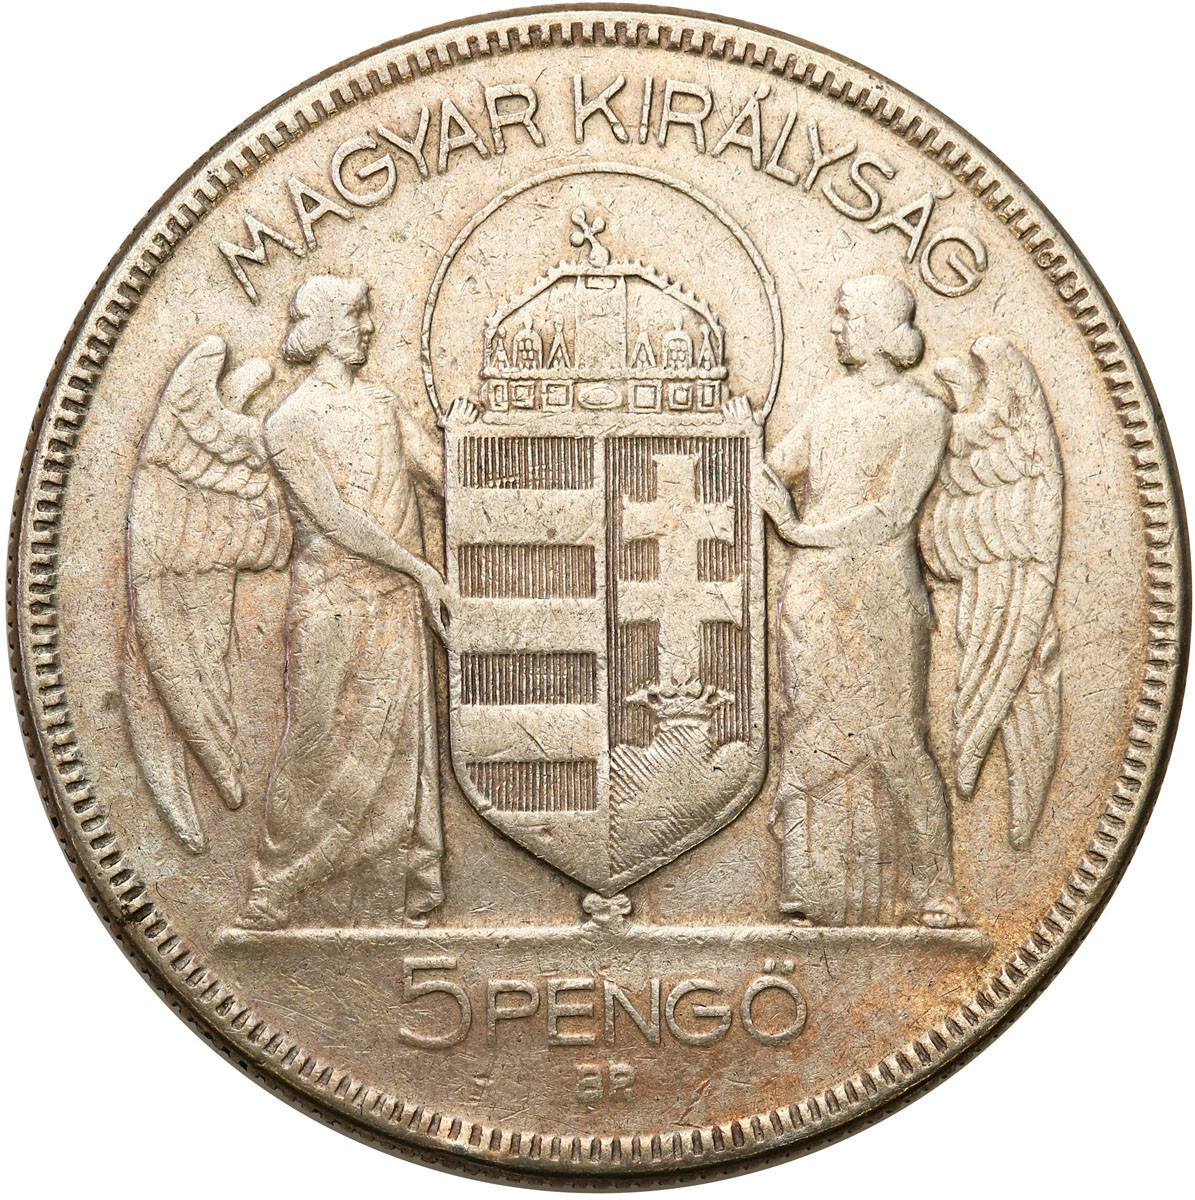 Węgry. 5 pengo 1930 BP, Budapeszt